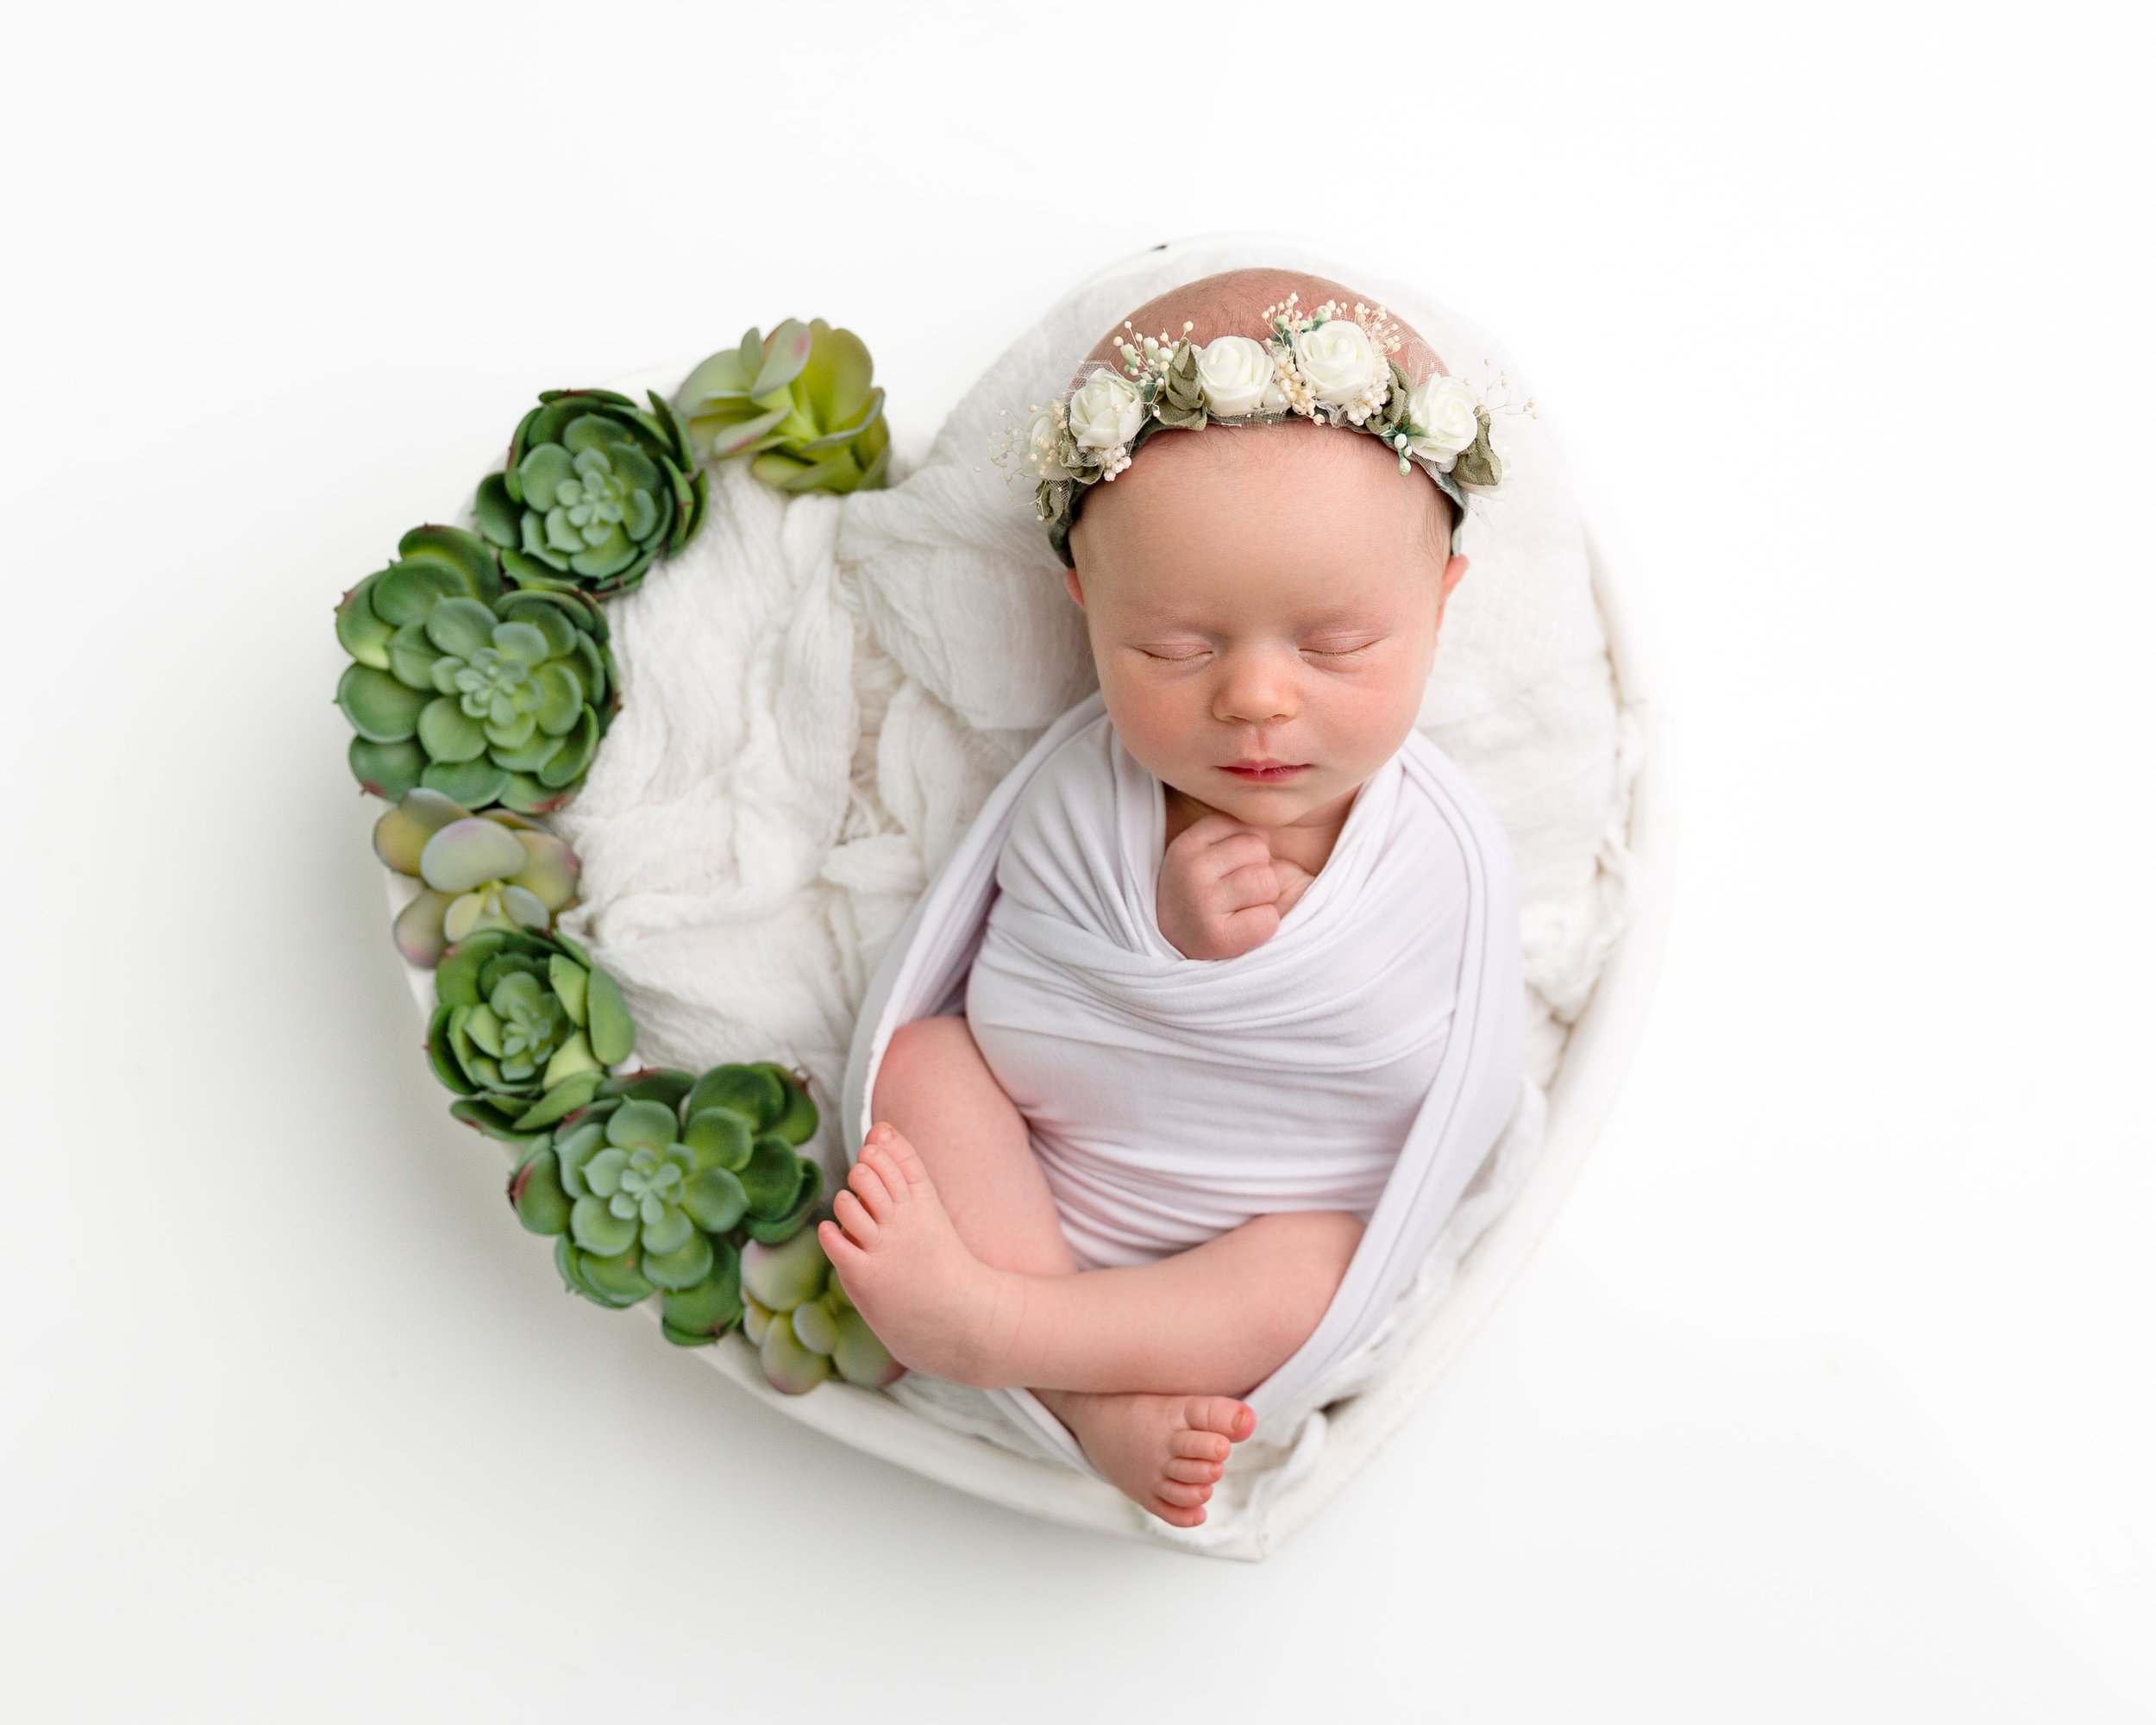 Baby-girl-photos-infant-images-Newborn-Photography-spokane-washinton-5.jpg